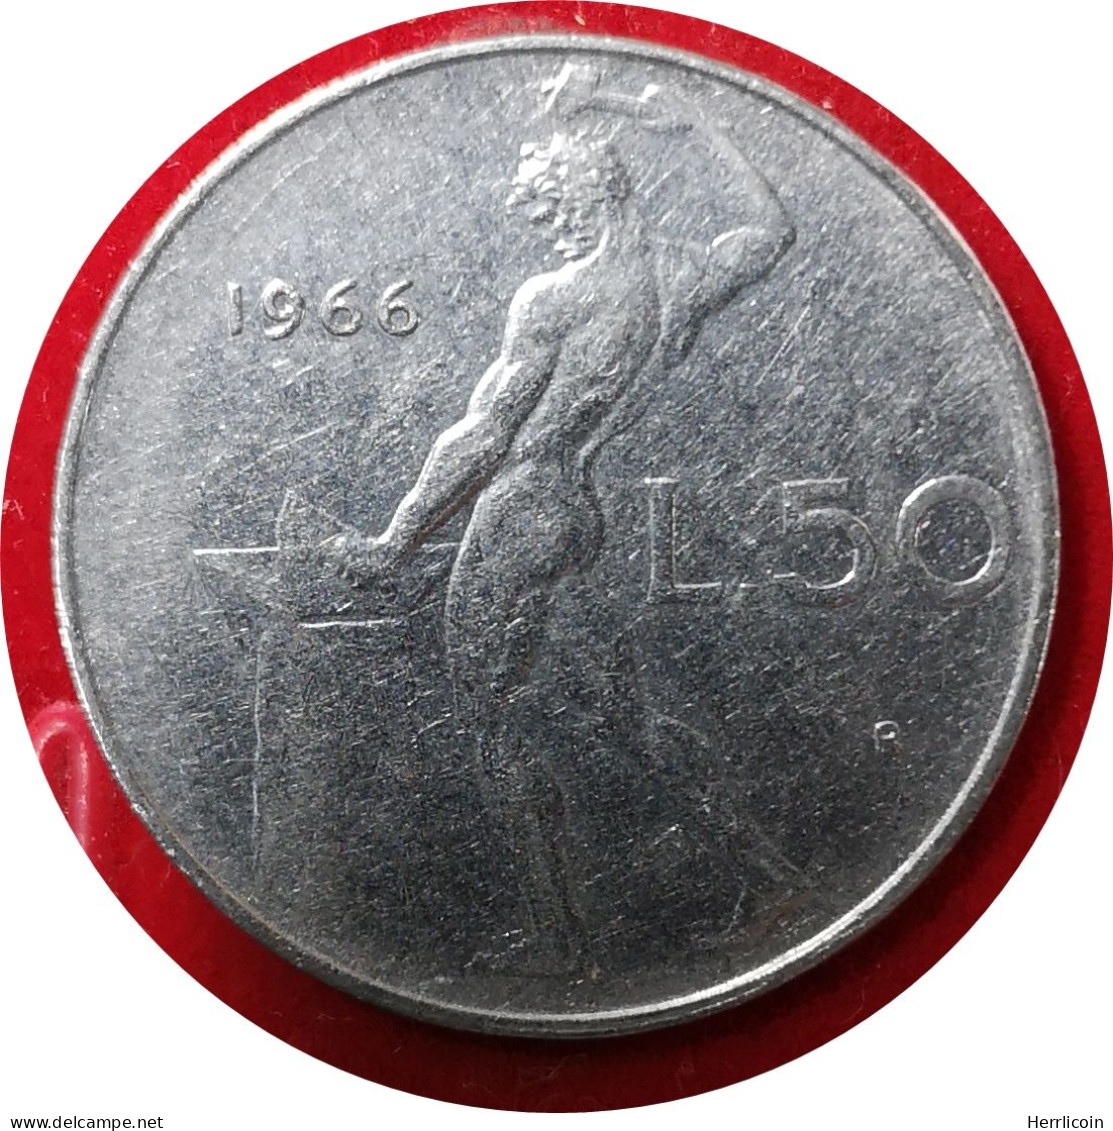 1966 - 50 Lire Grand Module - Italie [KM#95.1] - 50 Lire